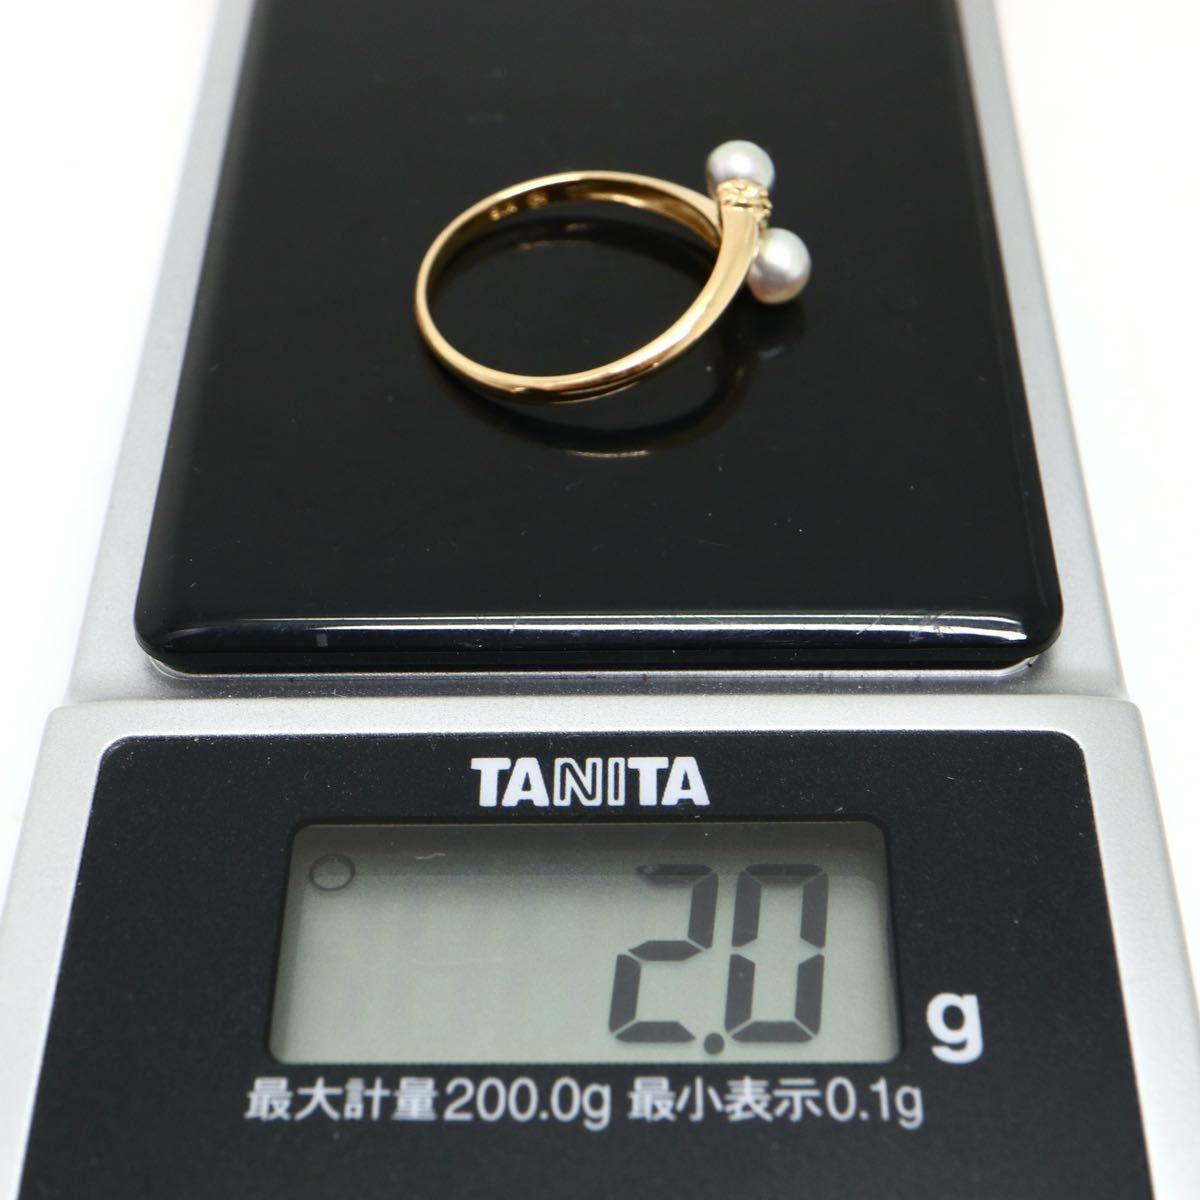 TASAKI(田崎真珠)《K18 アコヤ本真珠ベビーパールリング》F 15号 2.0g パール pearl jewelry ring 指輪 ジュエリー DH3/DH3_画像9